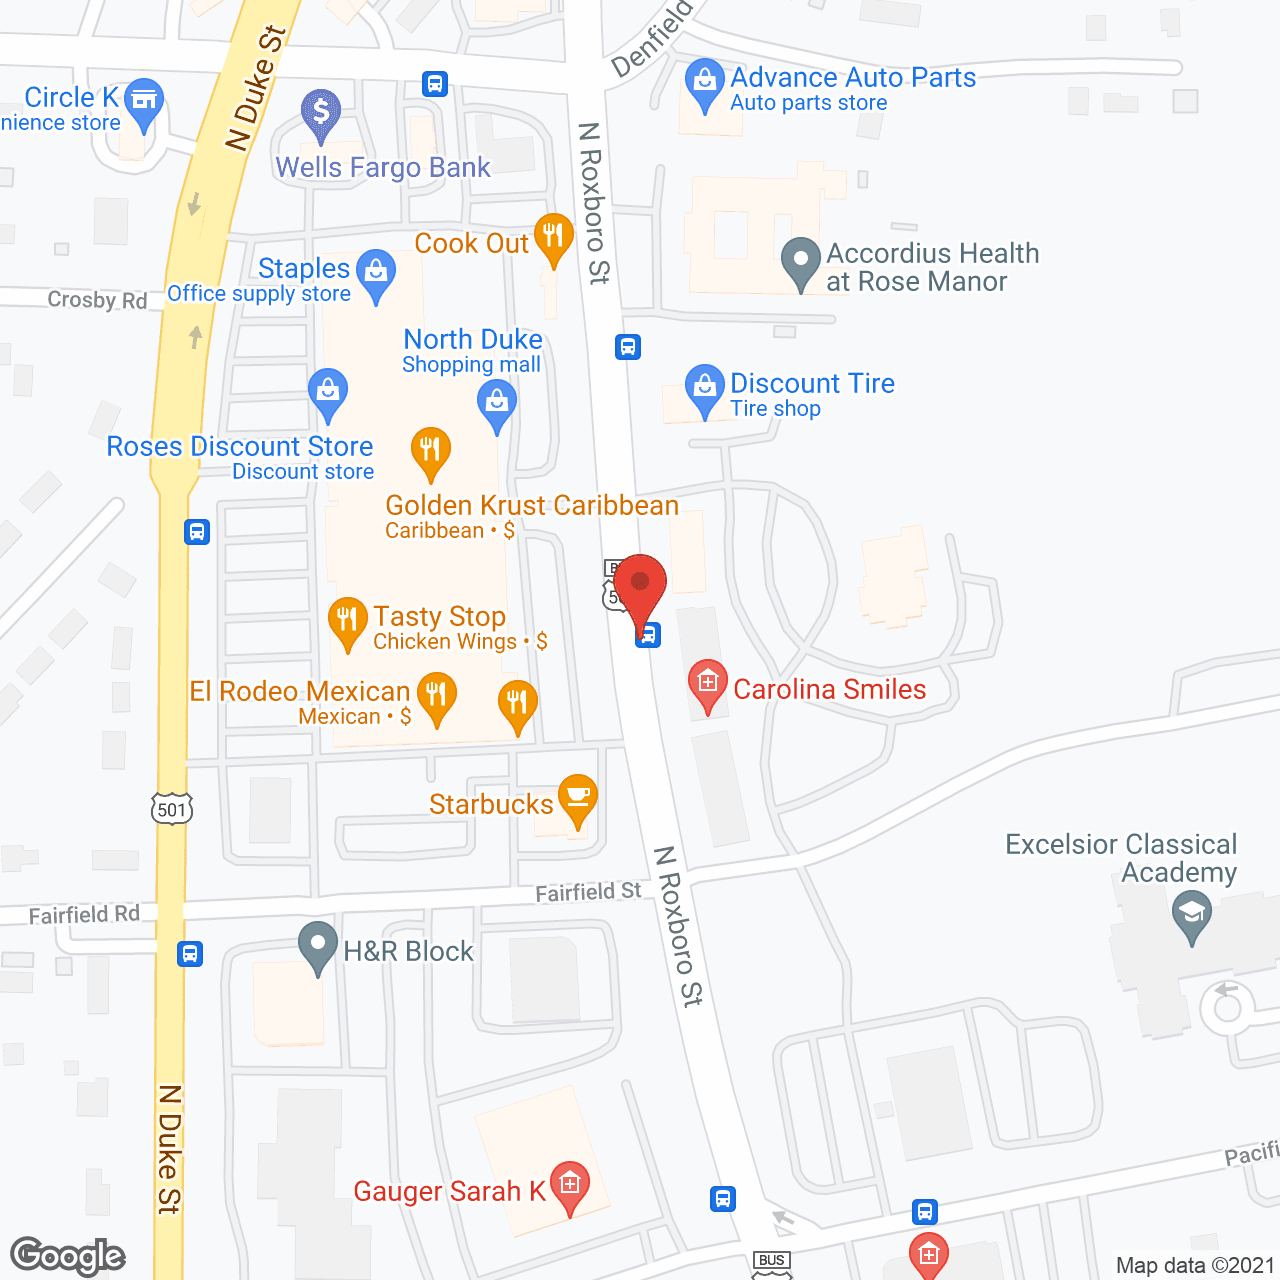 Rose Manor Healthcare Center in google map